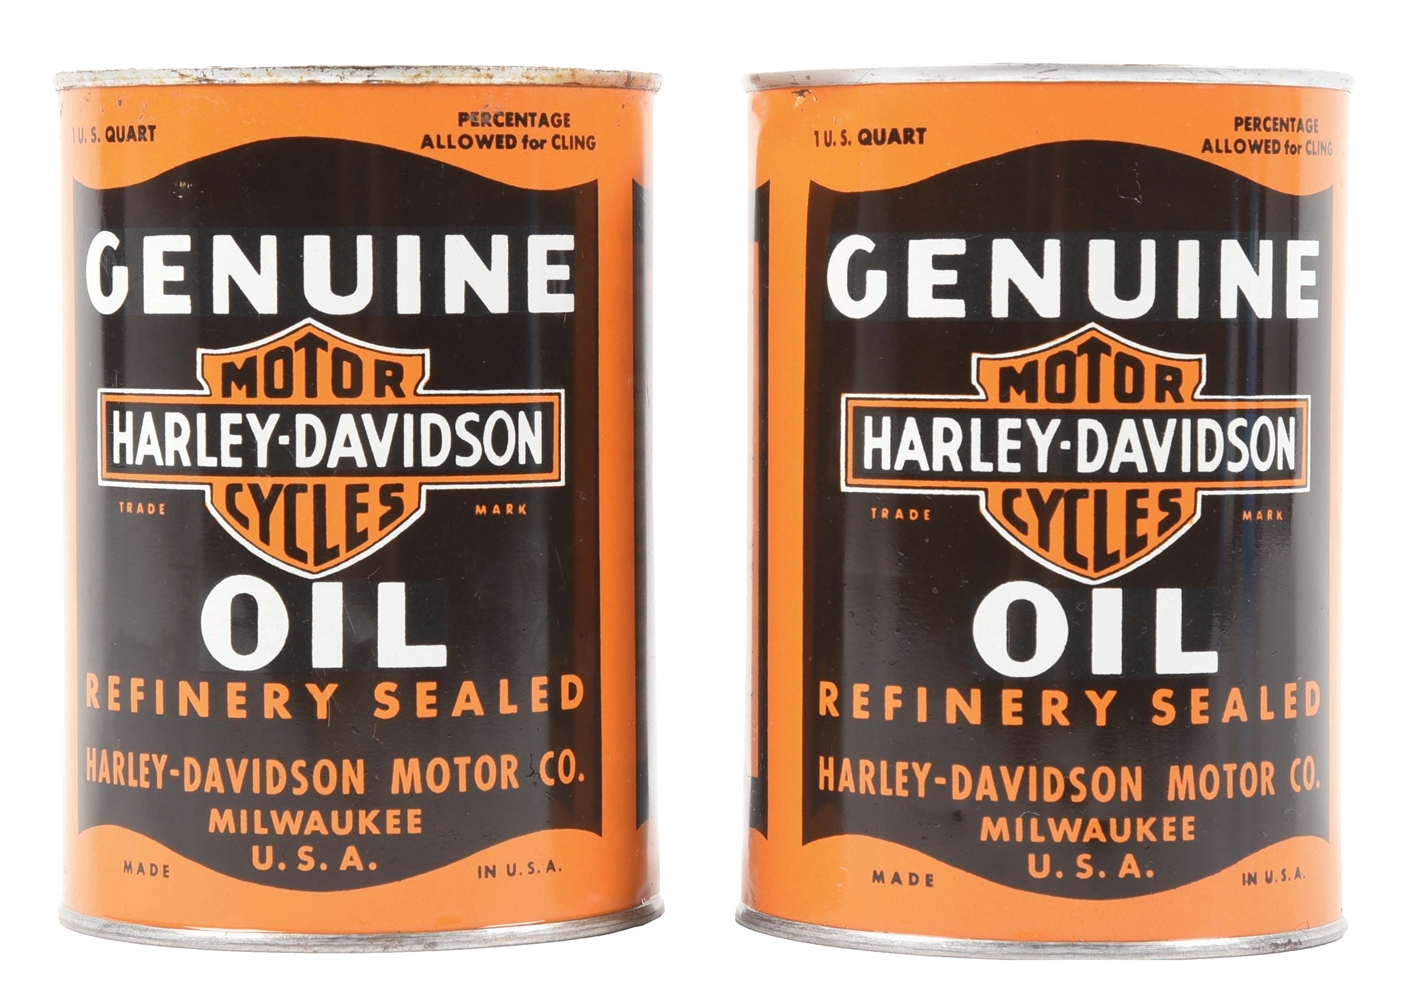 COLLECTION OF 2: NOS HARLEY-DAVIDSON GENUINE MOTOR OIL 1 QT. CANS.